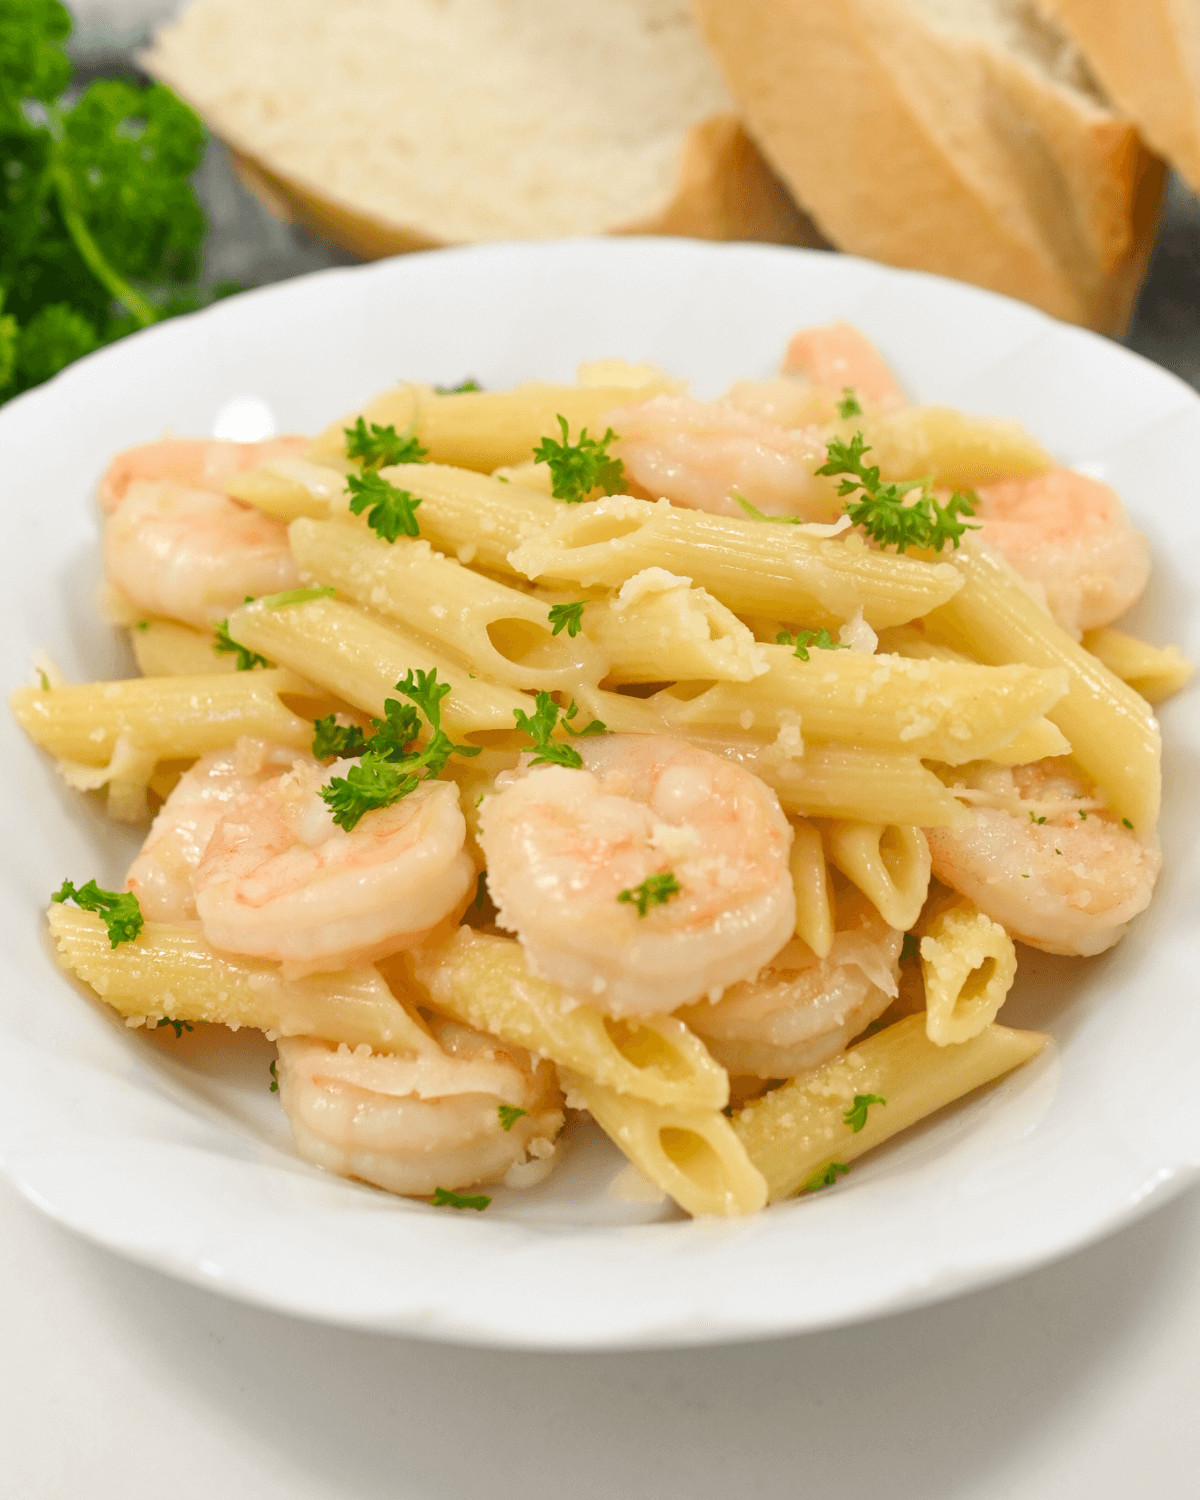 A bowl of the garlic parmesan shrimp pasta.